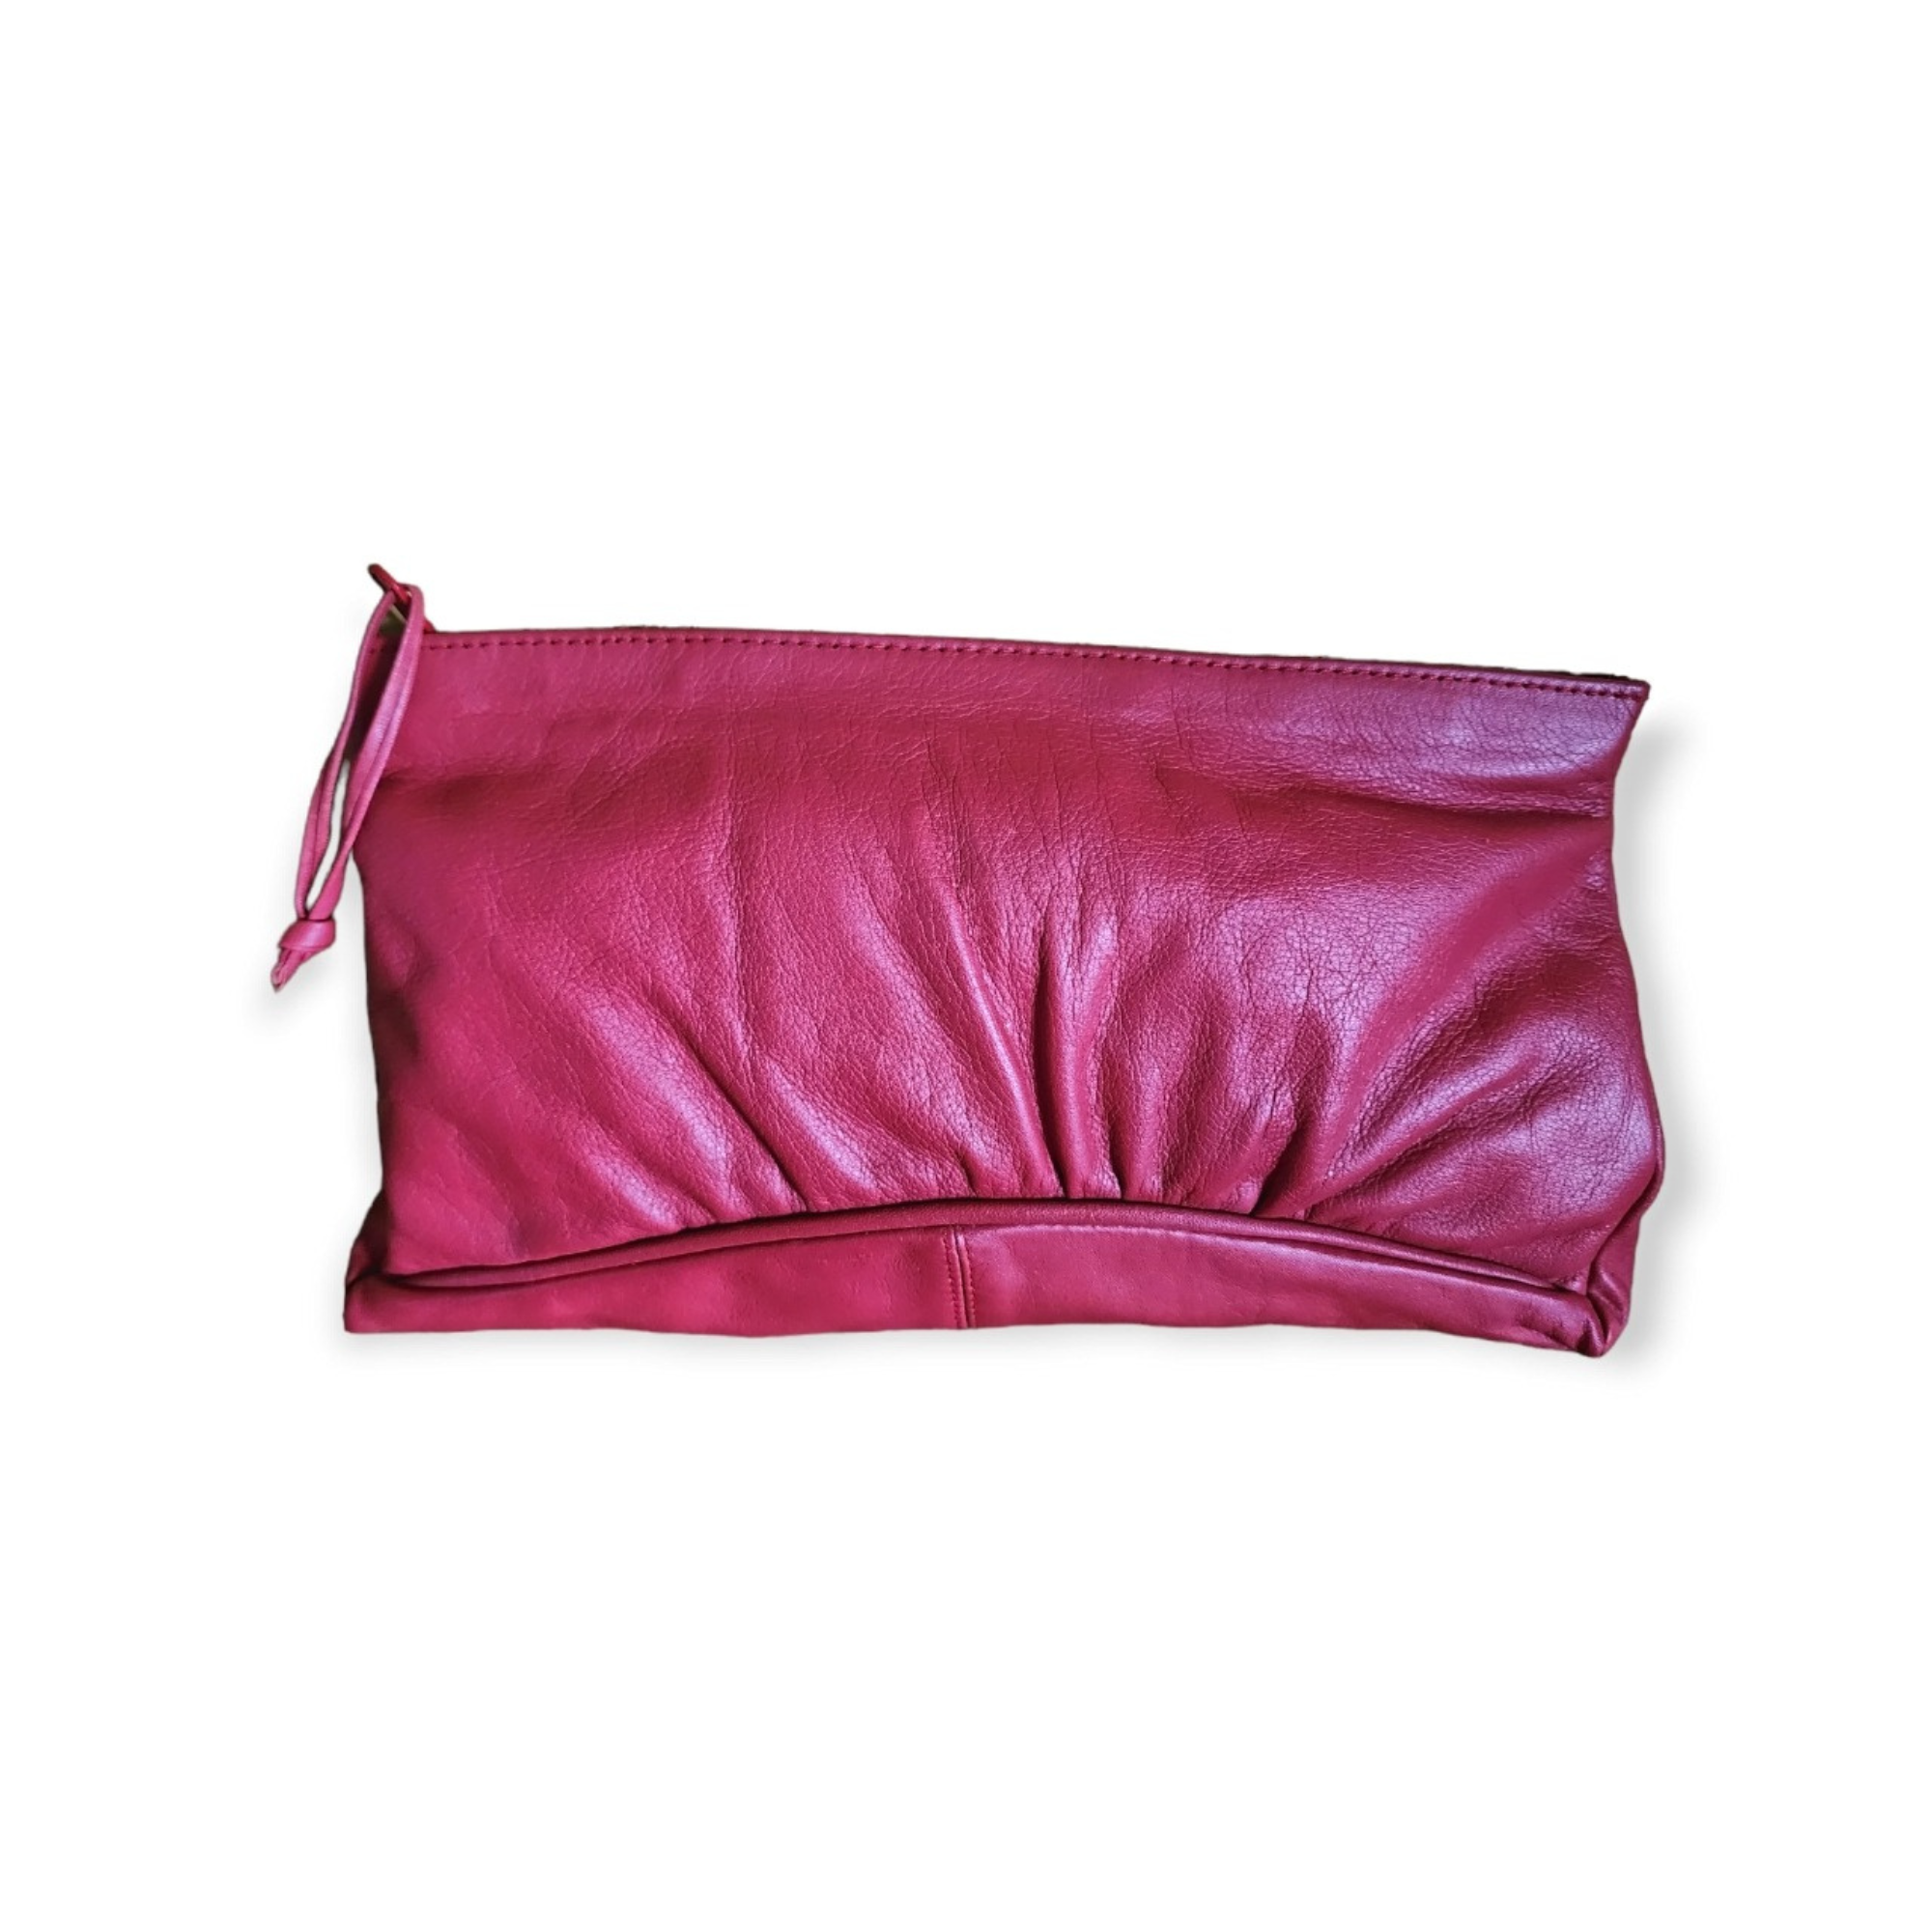 Vintage Contessa Red Leather Clutch Handbag